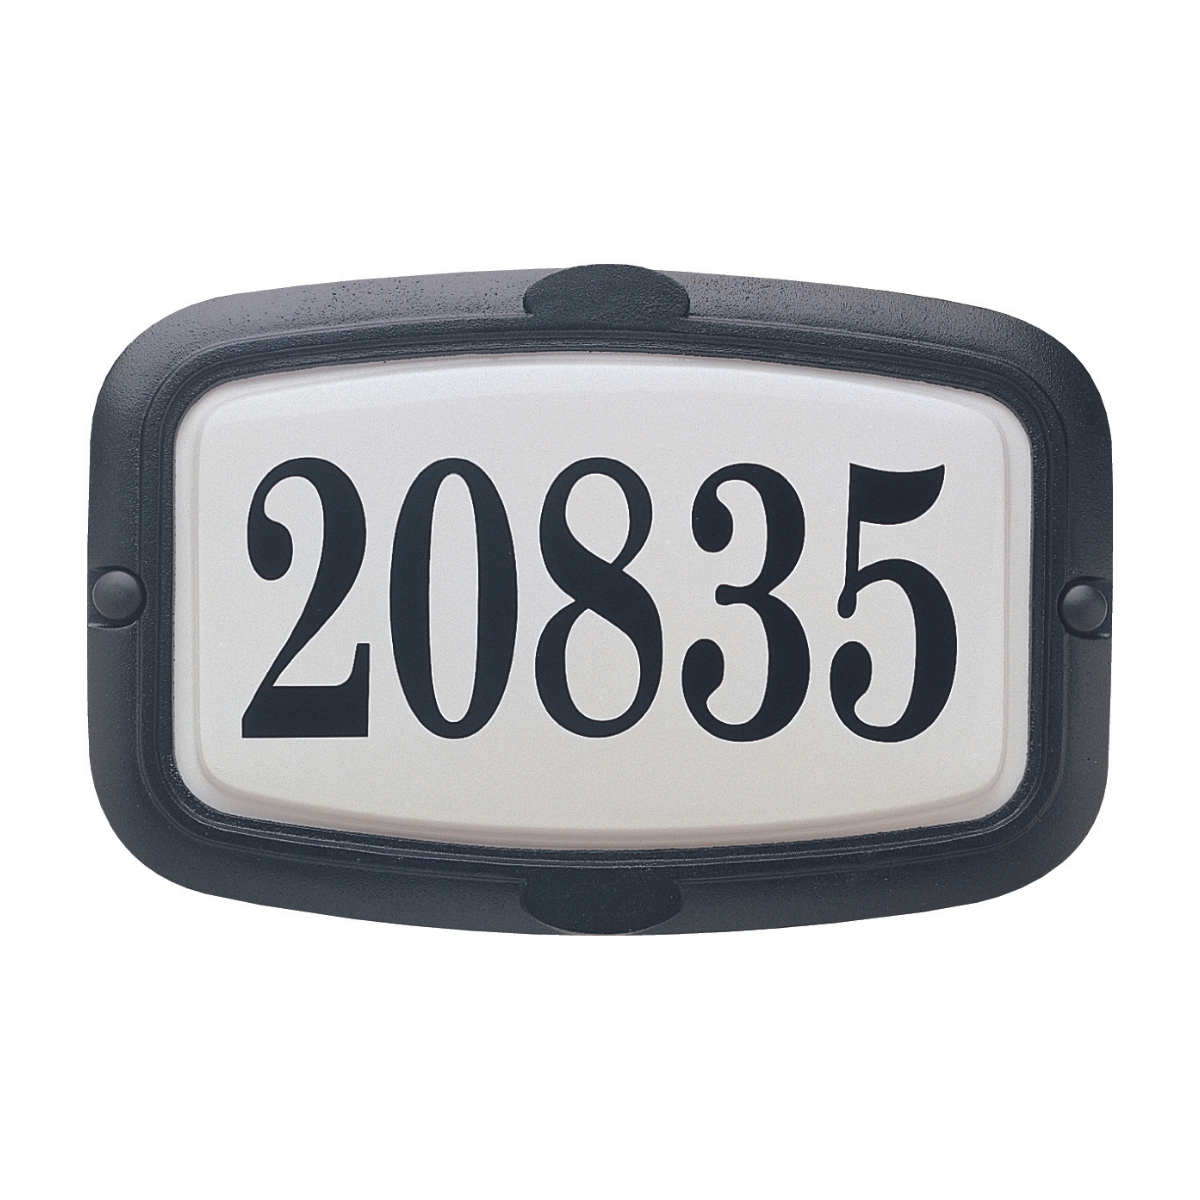 Vintage - Address Plaque - 85001